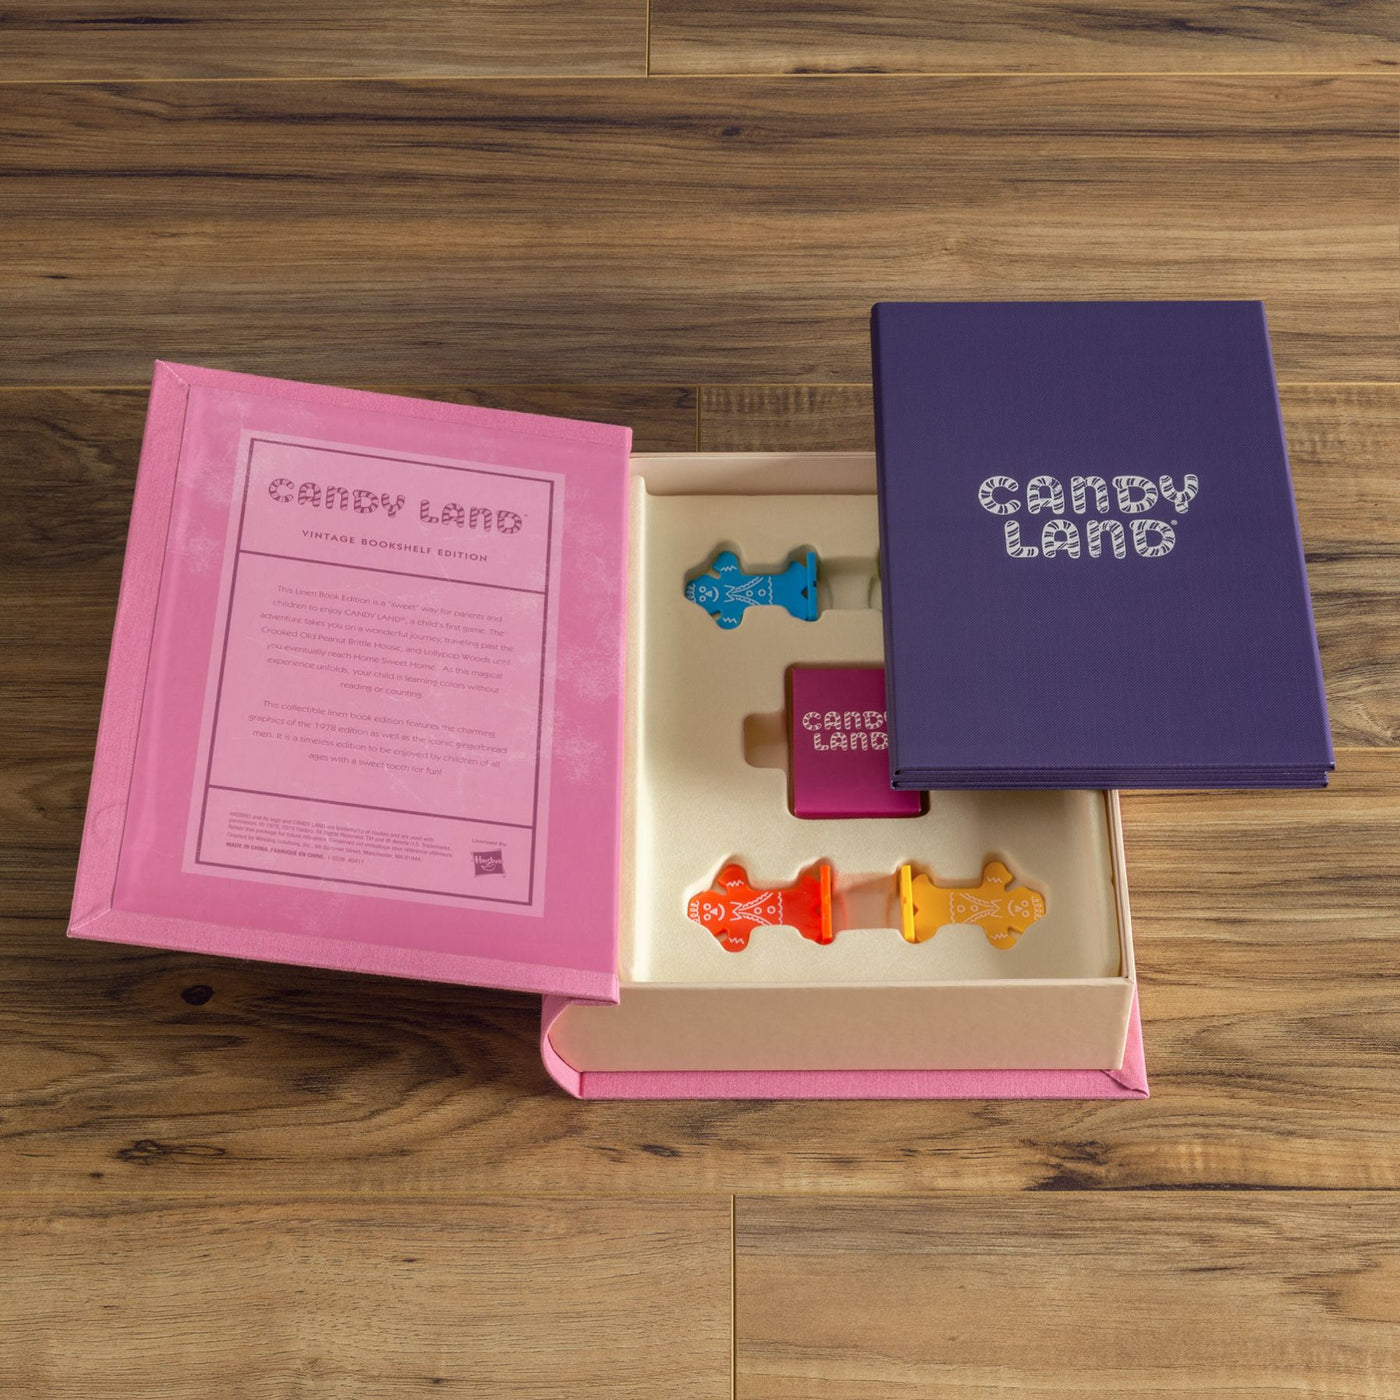 Vintage Bookshelf Game - Candy Land